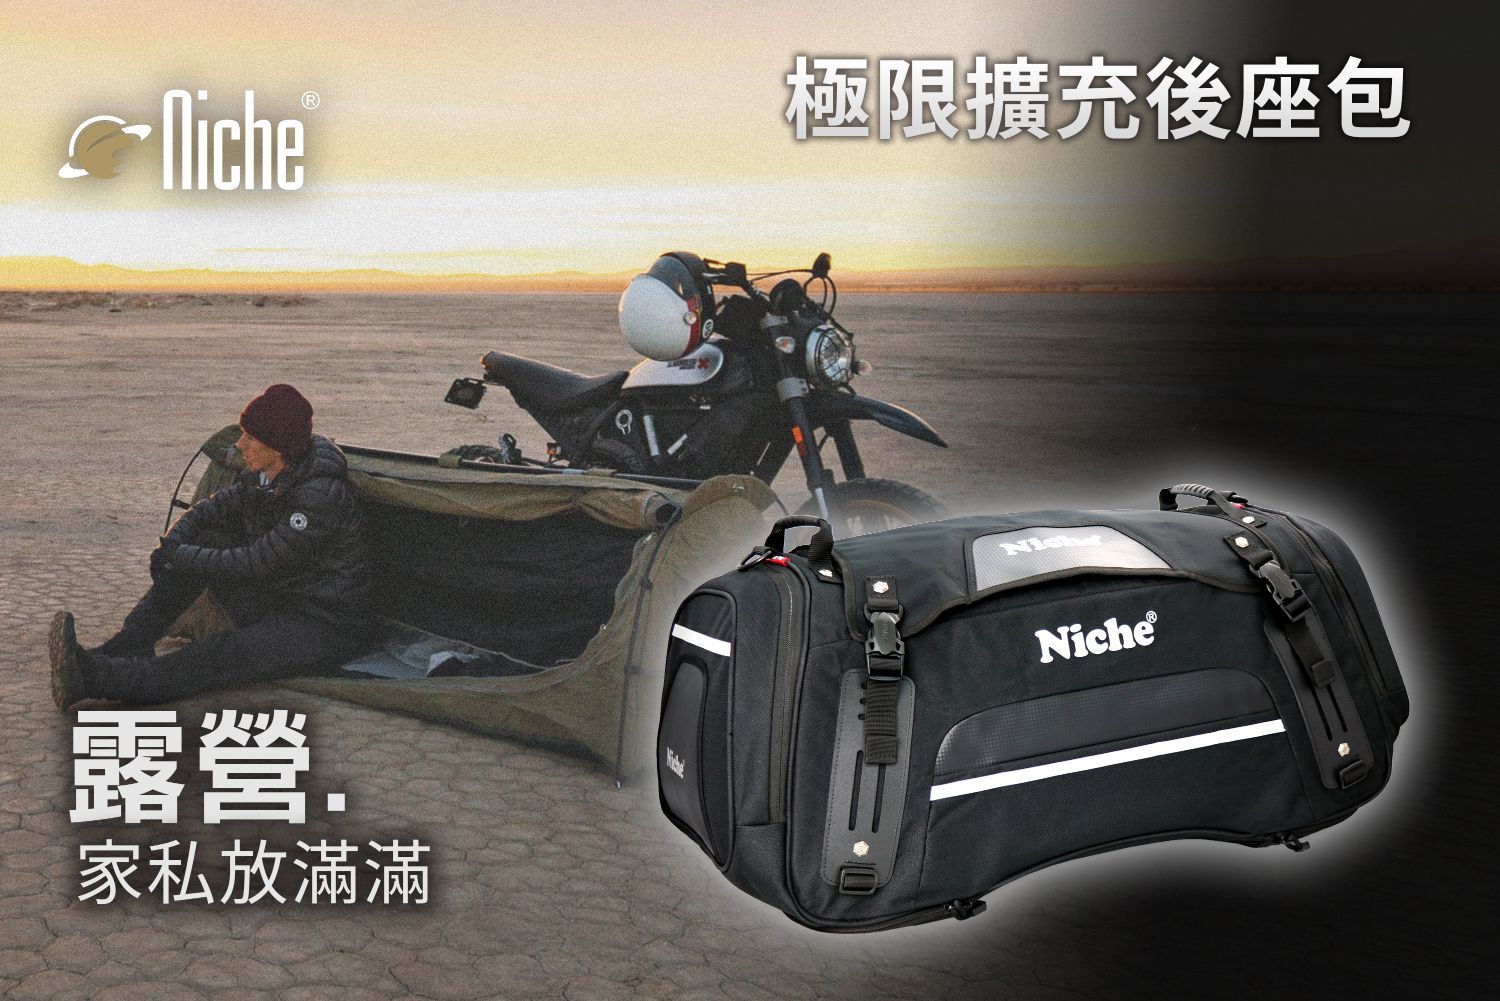 Niche 樂奇-摩托車專用包|工具收納袋與攜帶系統|都會行旅後背包與配件包 - 大容量 旅遊 露營的好夥伴 你不知道它這麼能裝